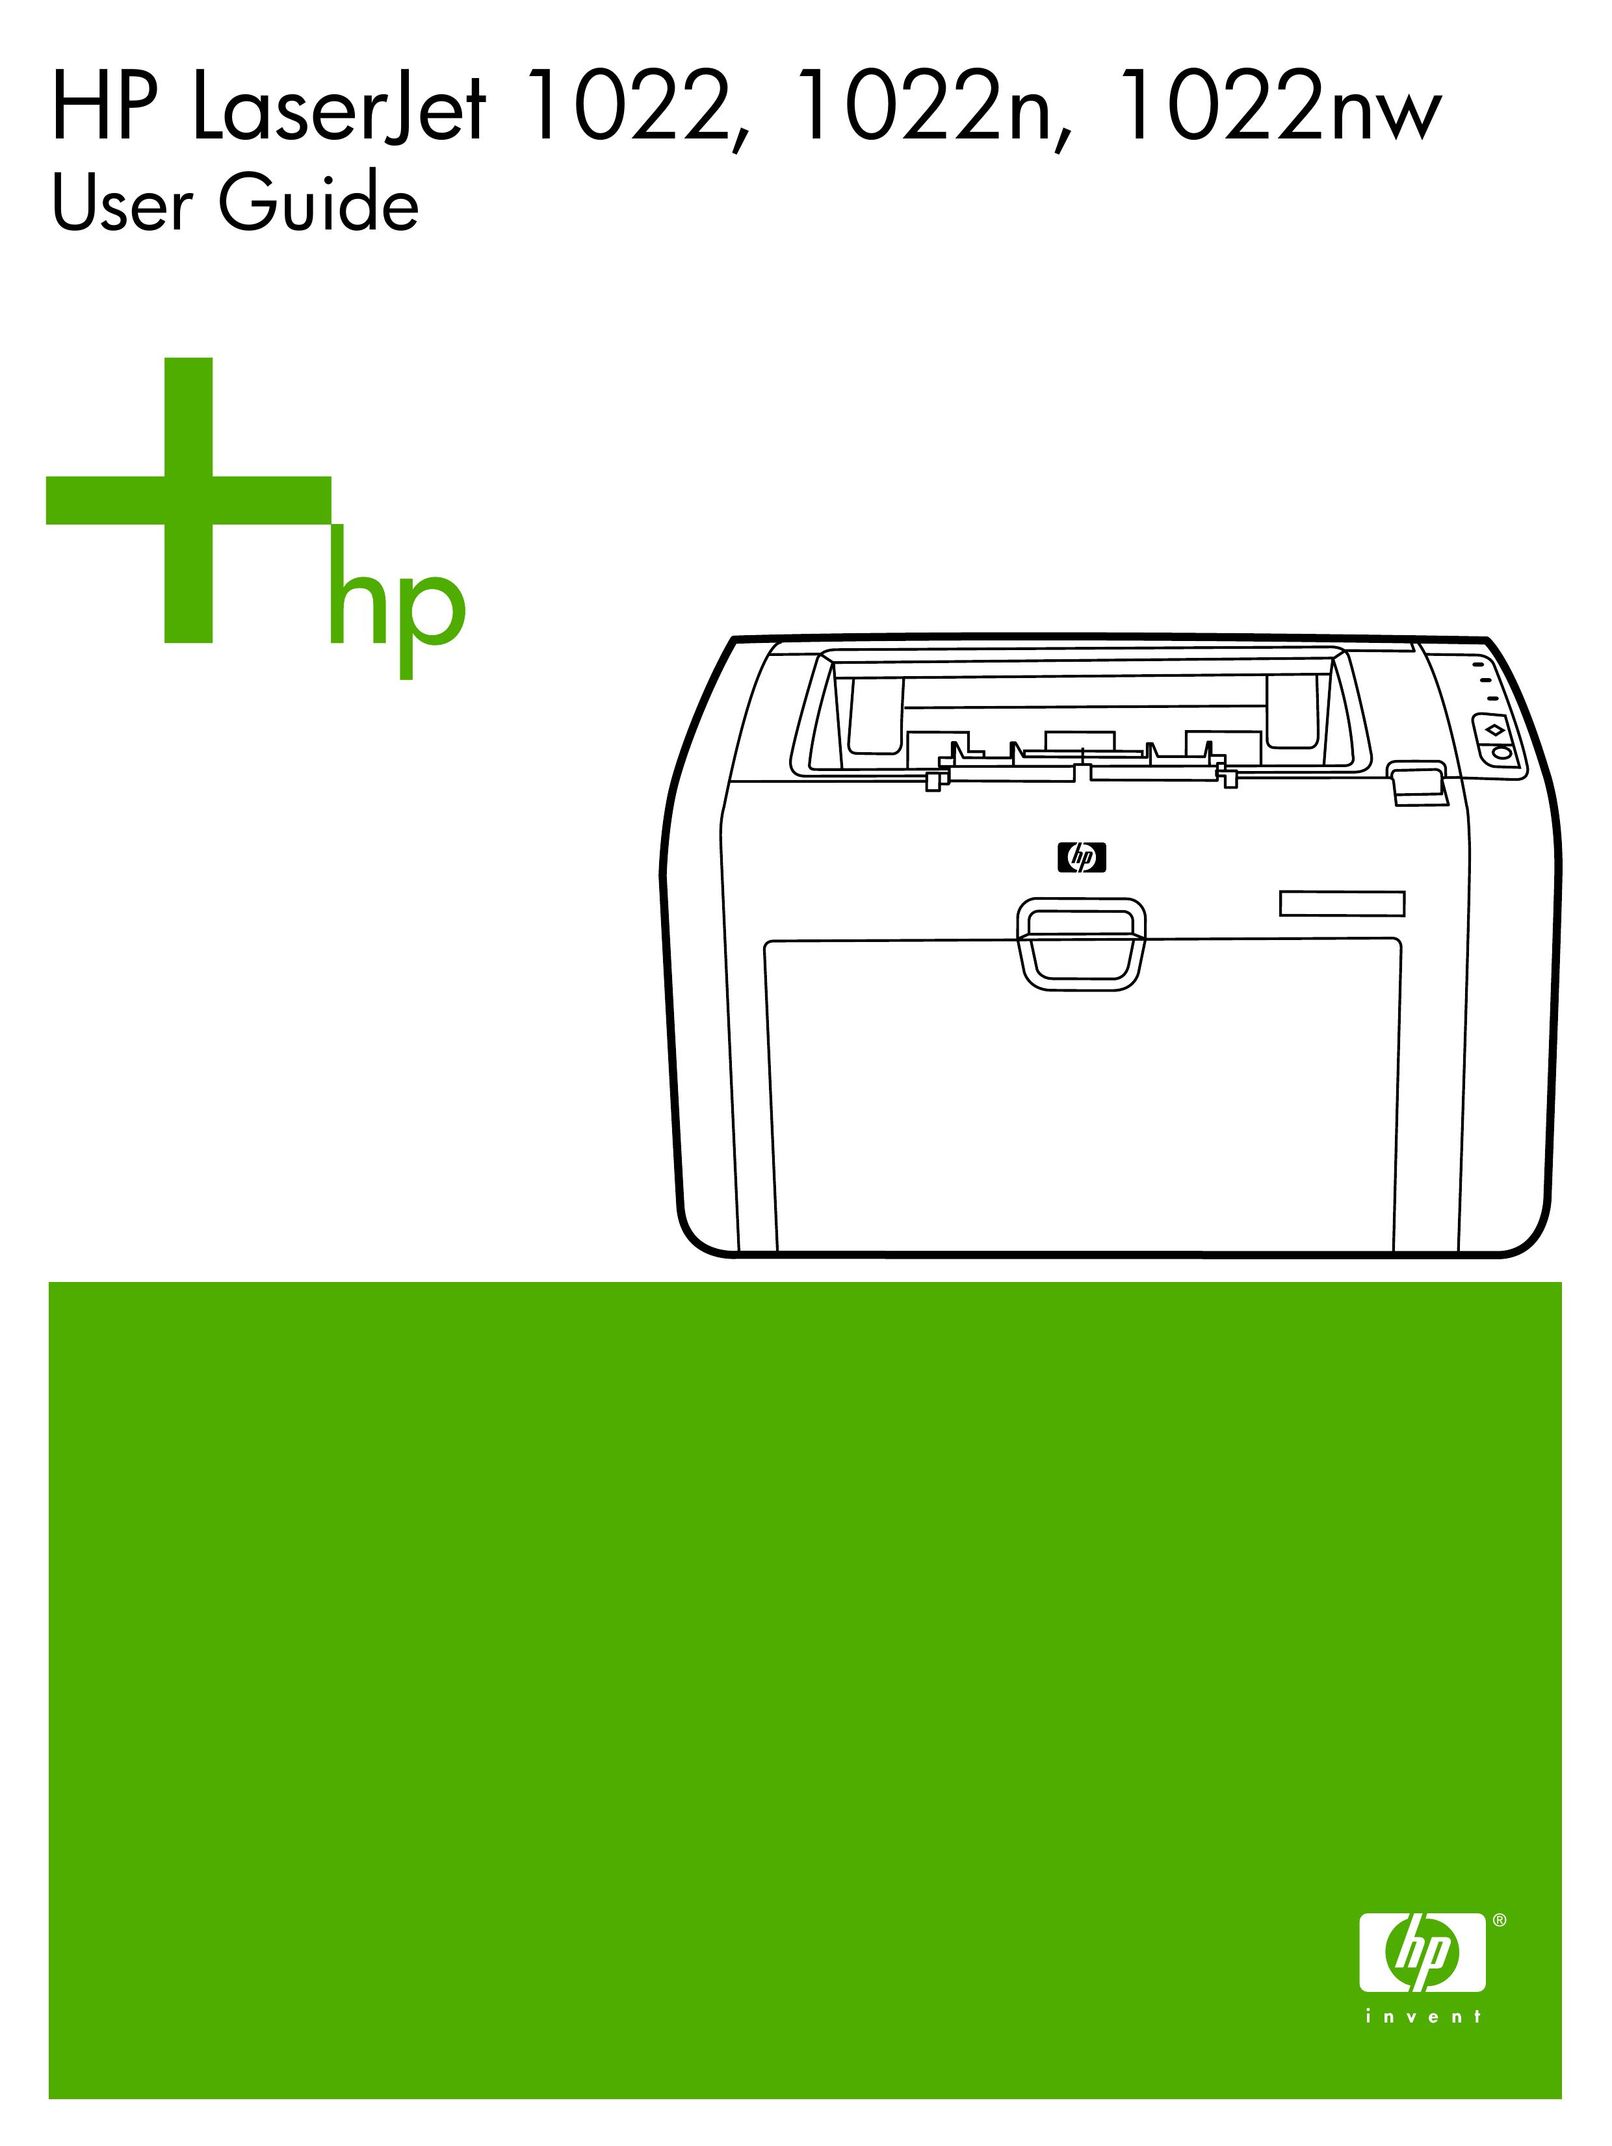 HP (Hewlett-Packard) 1022nw Printer User Manual